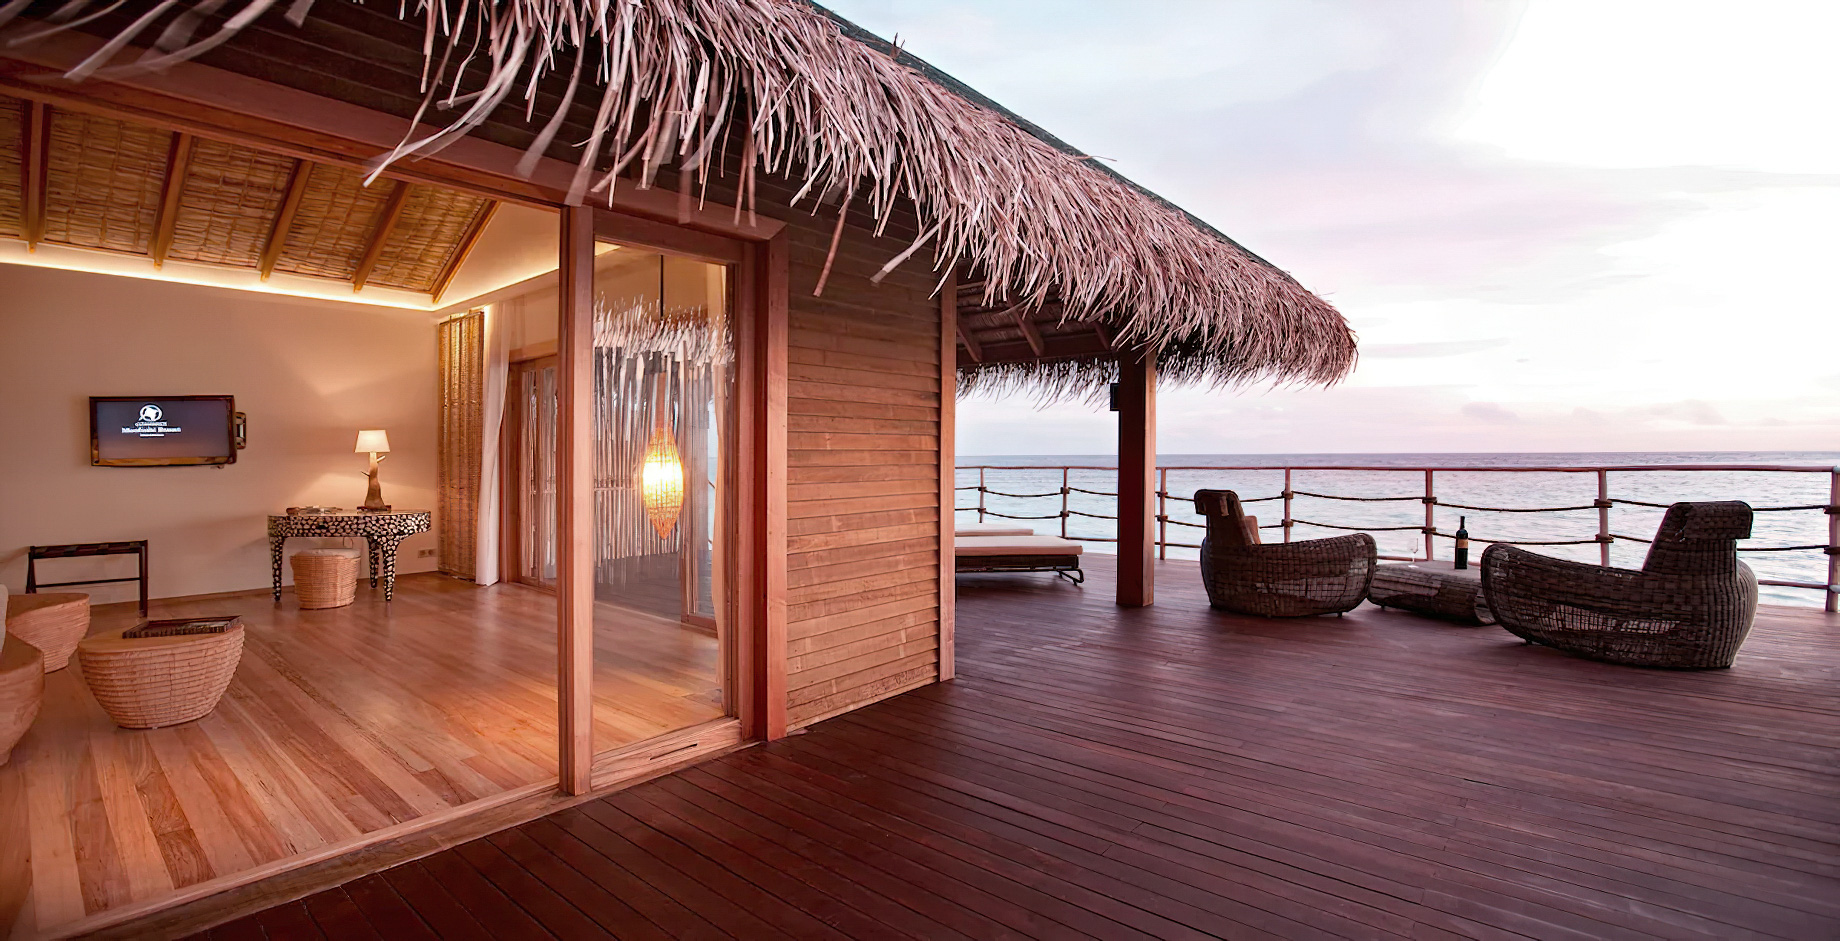 Constance Moofushi Resort - South Ari Atoll, Maldives - Overwater Villa Deck View